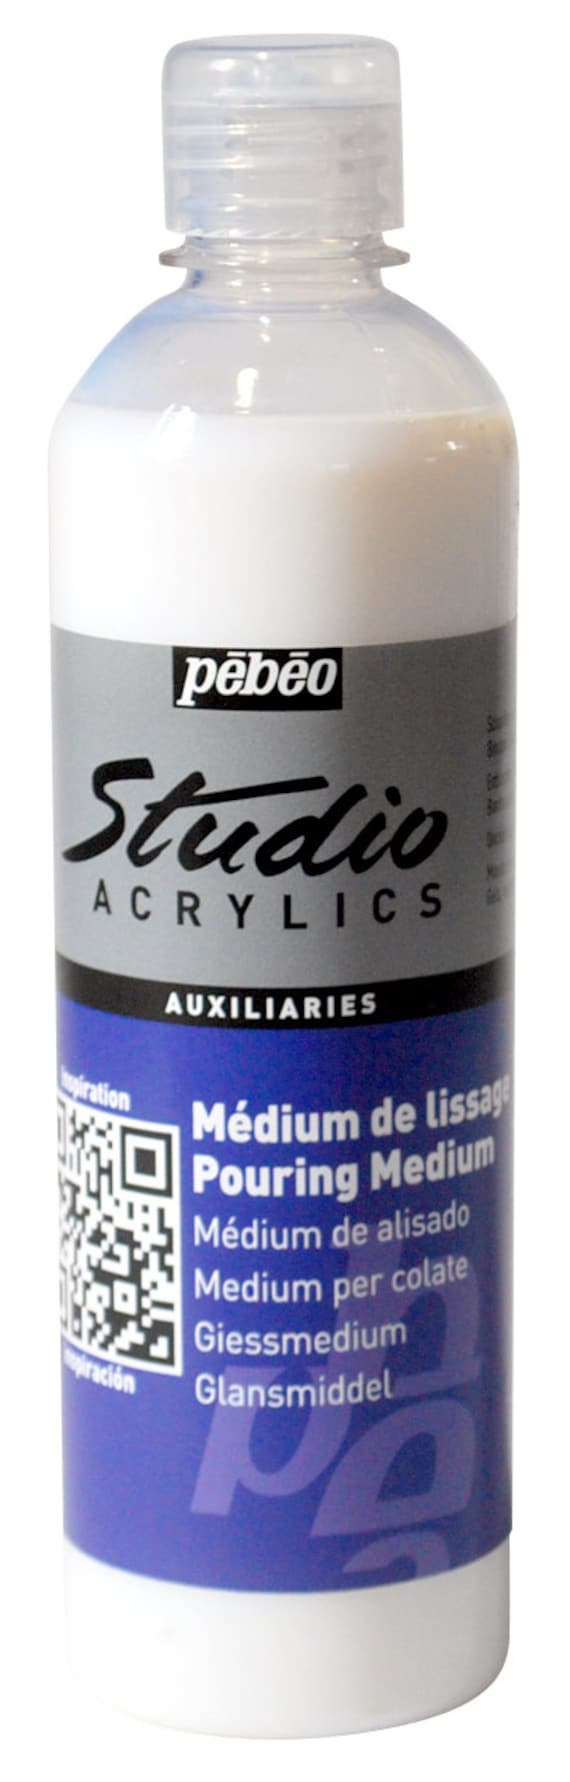 Pebeo Studio Acrylic Pouring Medium in 250ml or 500ml Bottle 